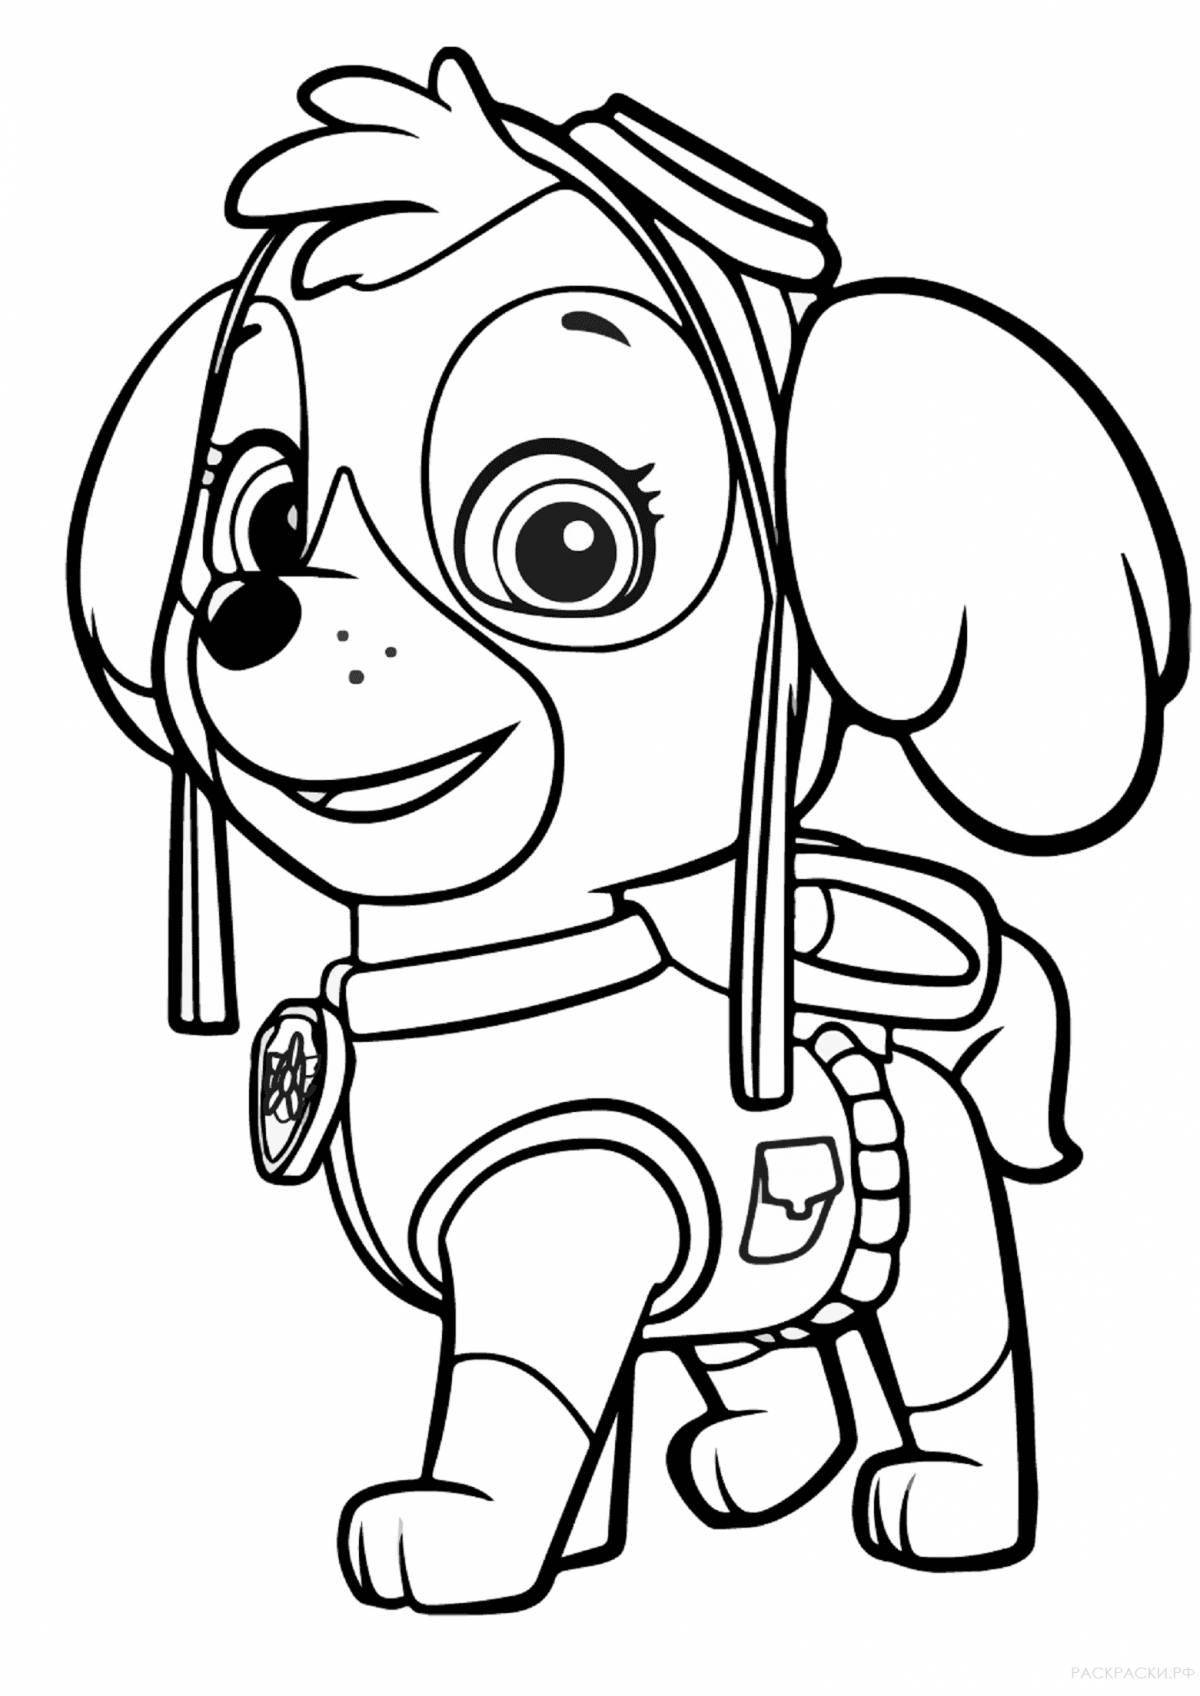 Adorable dog patrol coloring page